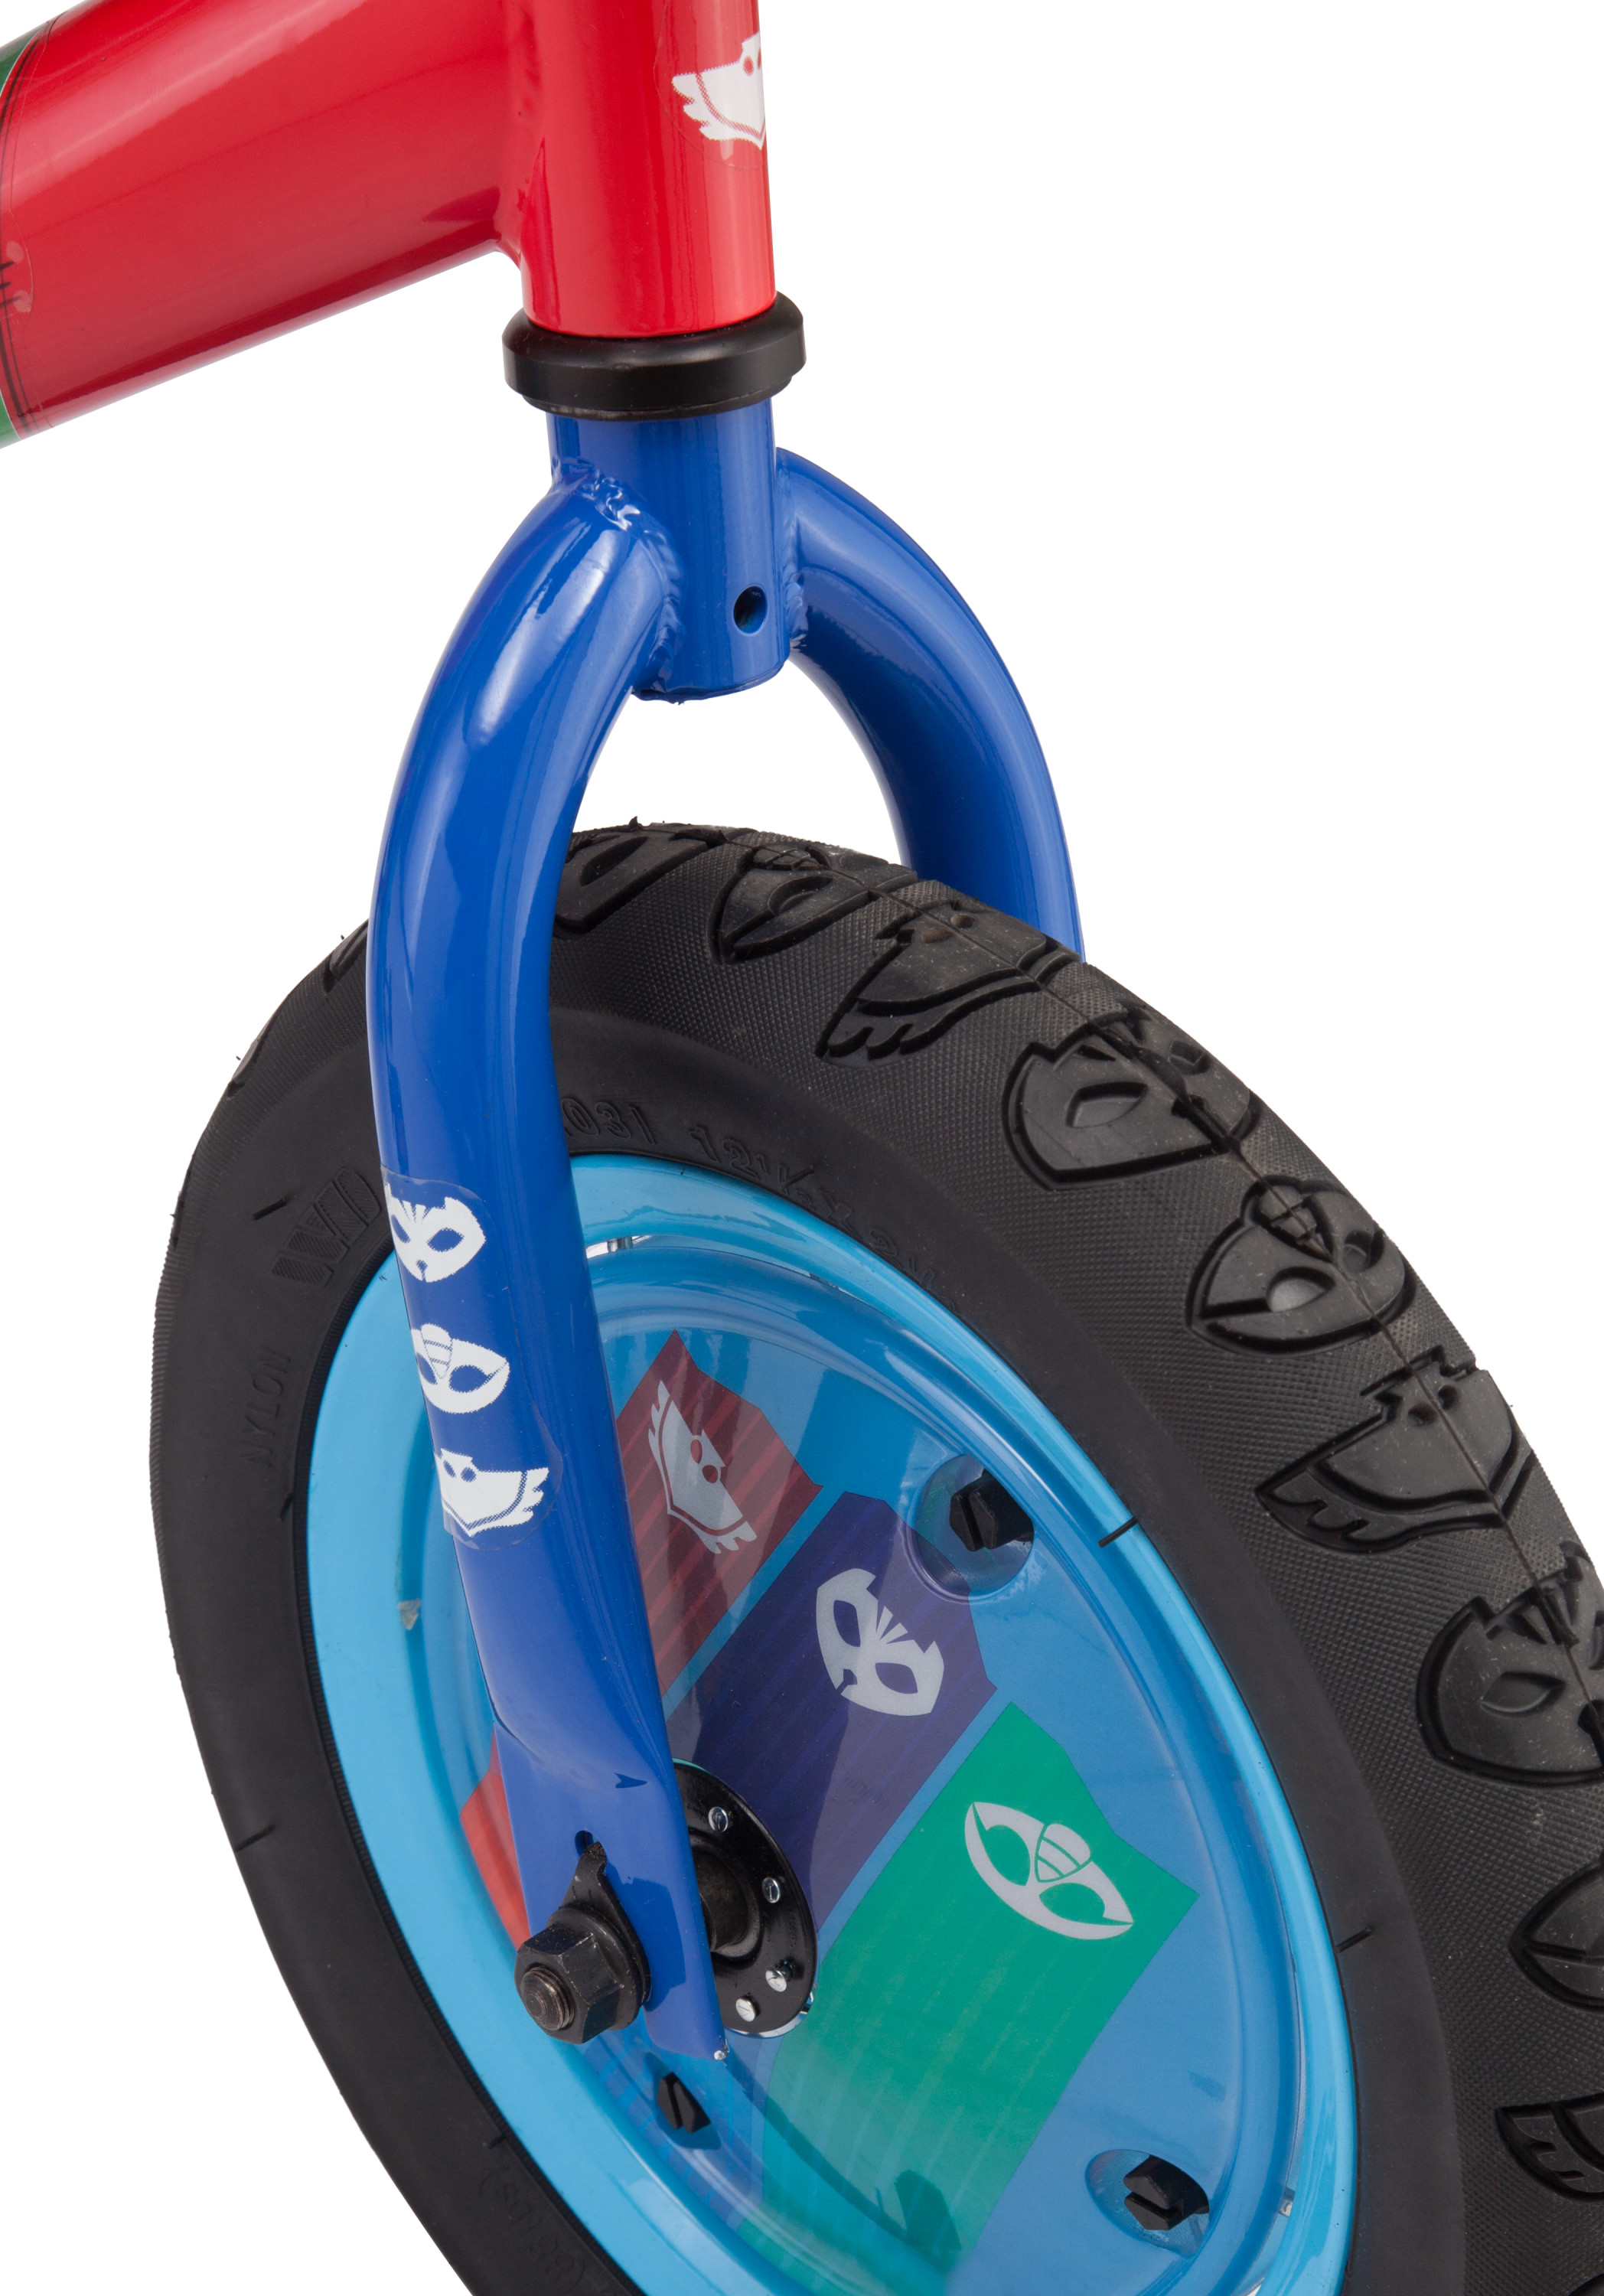 E1 PJ Masks: Catboy Kids Bike, 12-inch wheels, blue, on Disney Junior - image 6 of 7